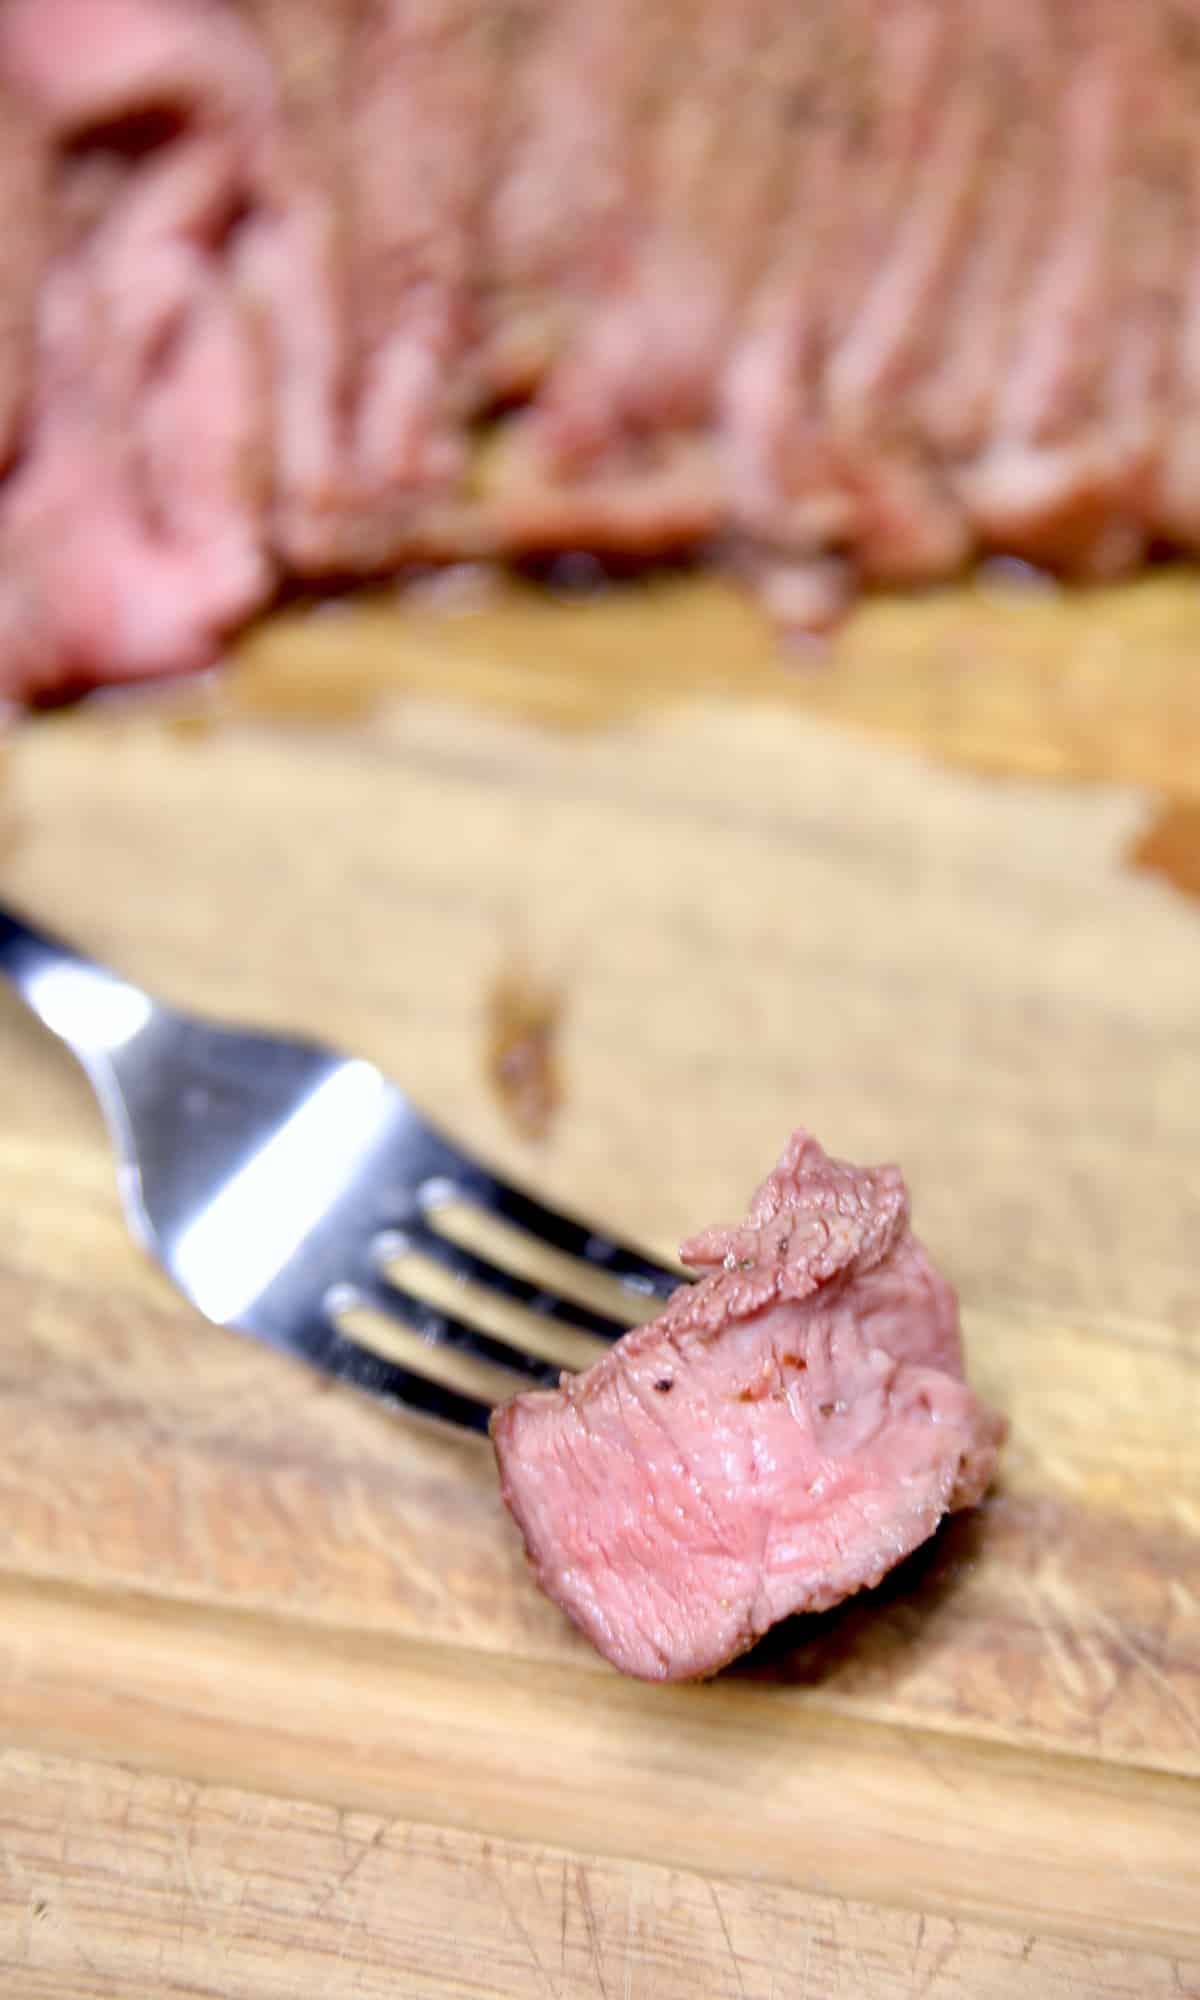 Sirloin steak bite on a fork.